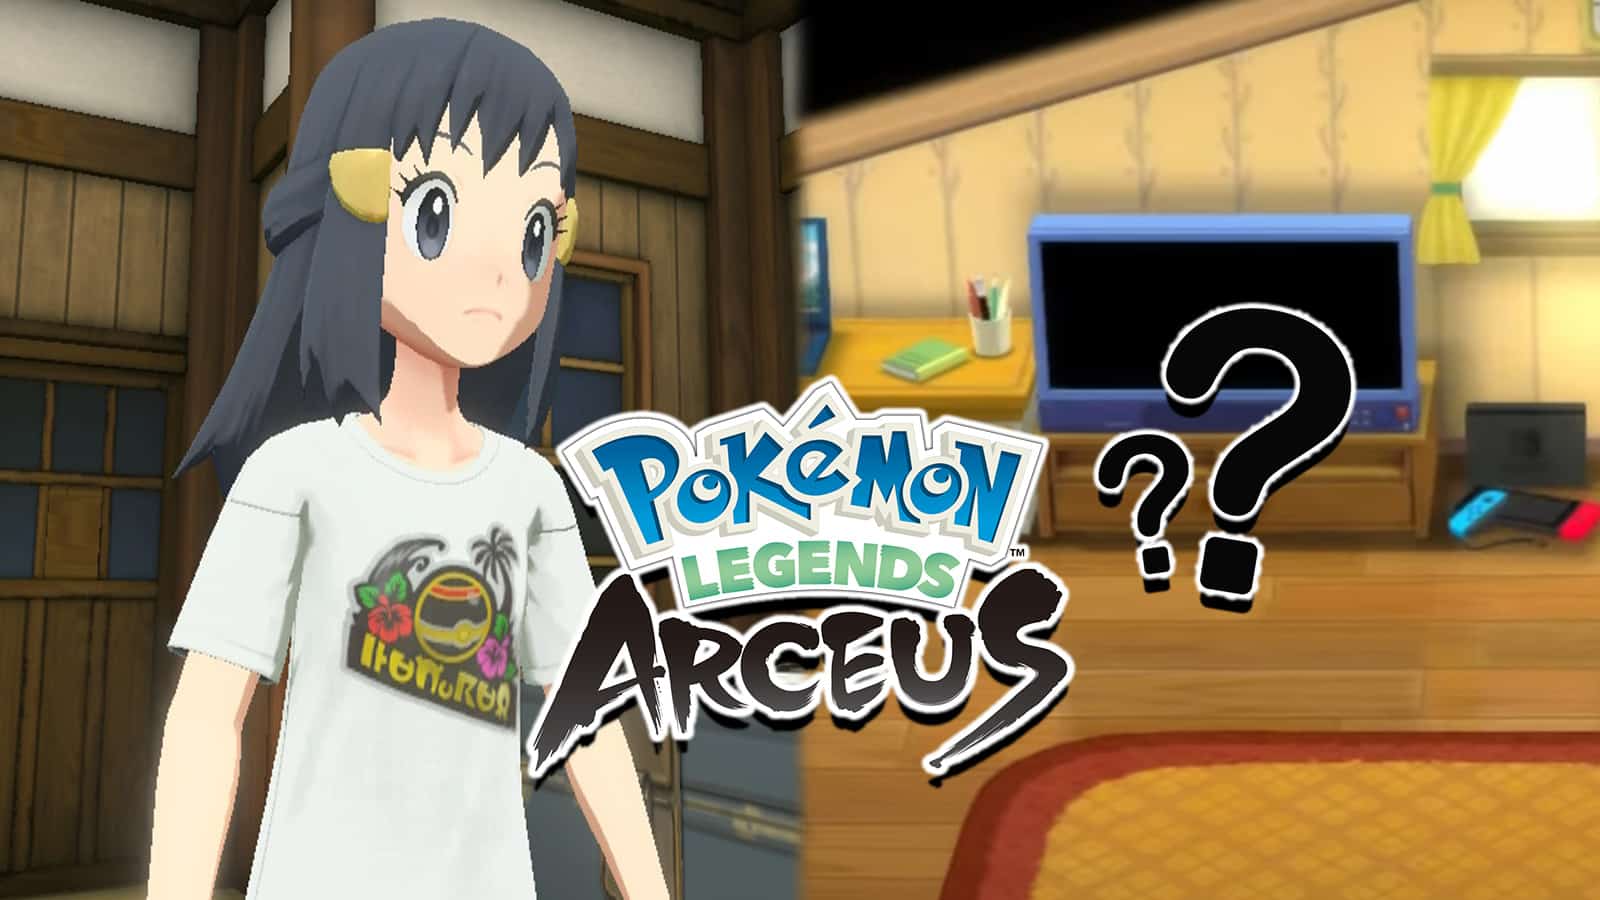 Pokemon Legends Arceus protagonist next to Pokemon Brilliant Diamond & Shining Pearl bedoroom screenshot.